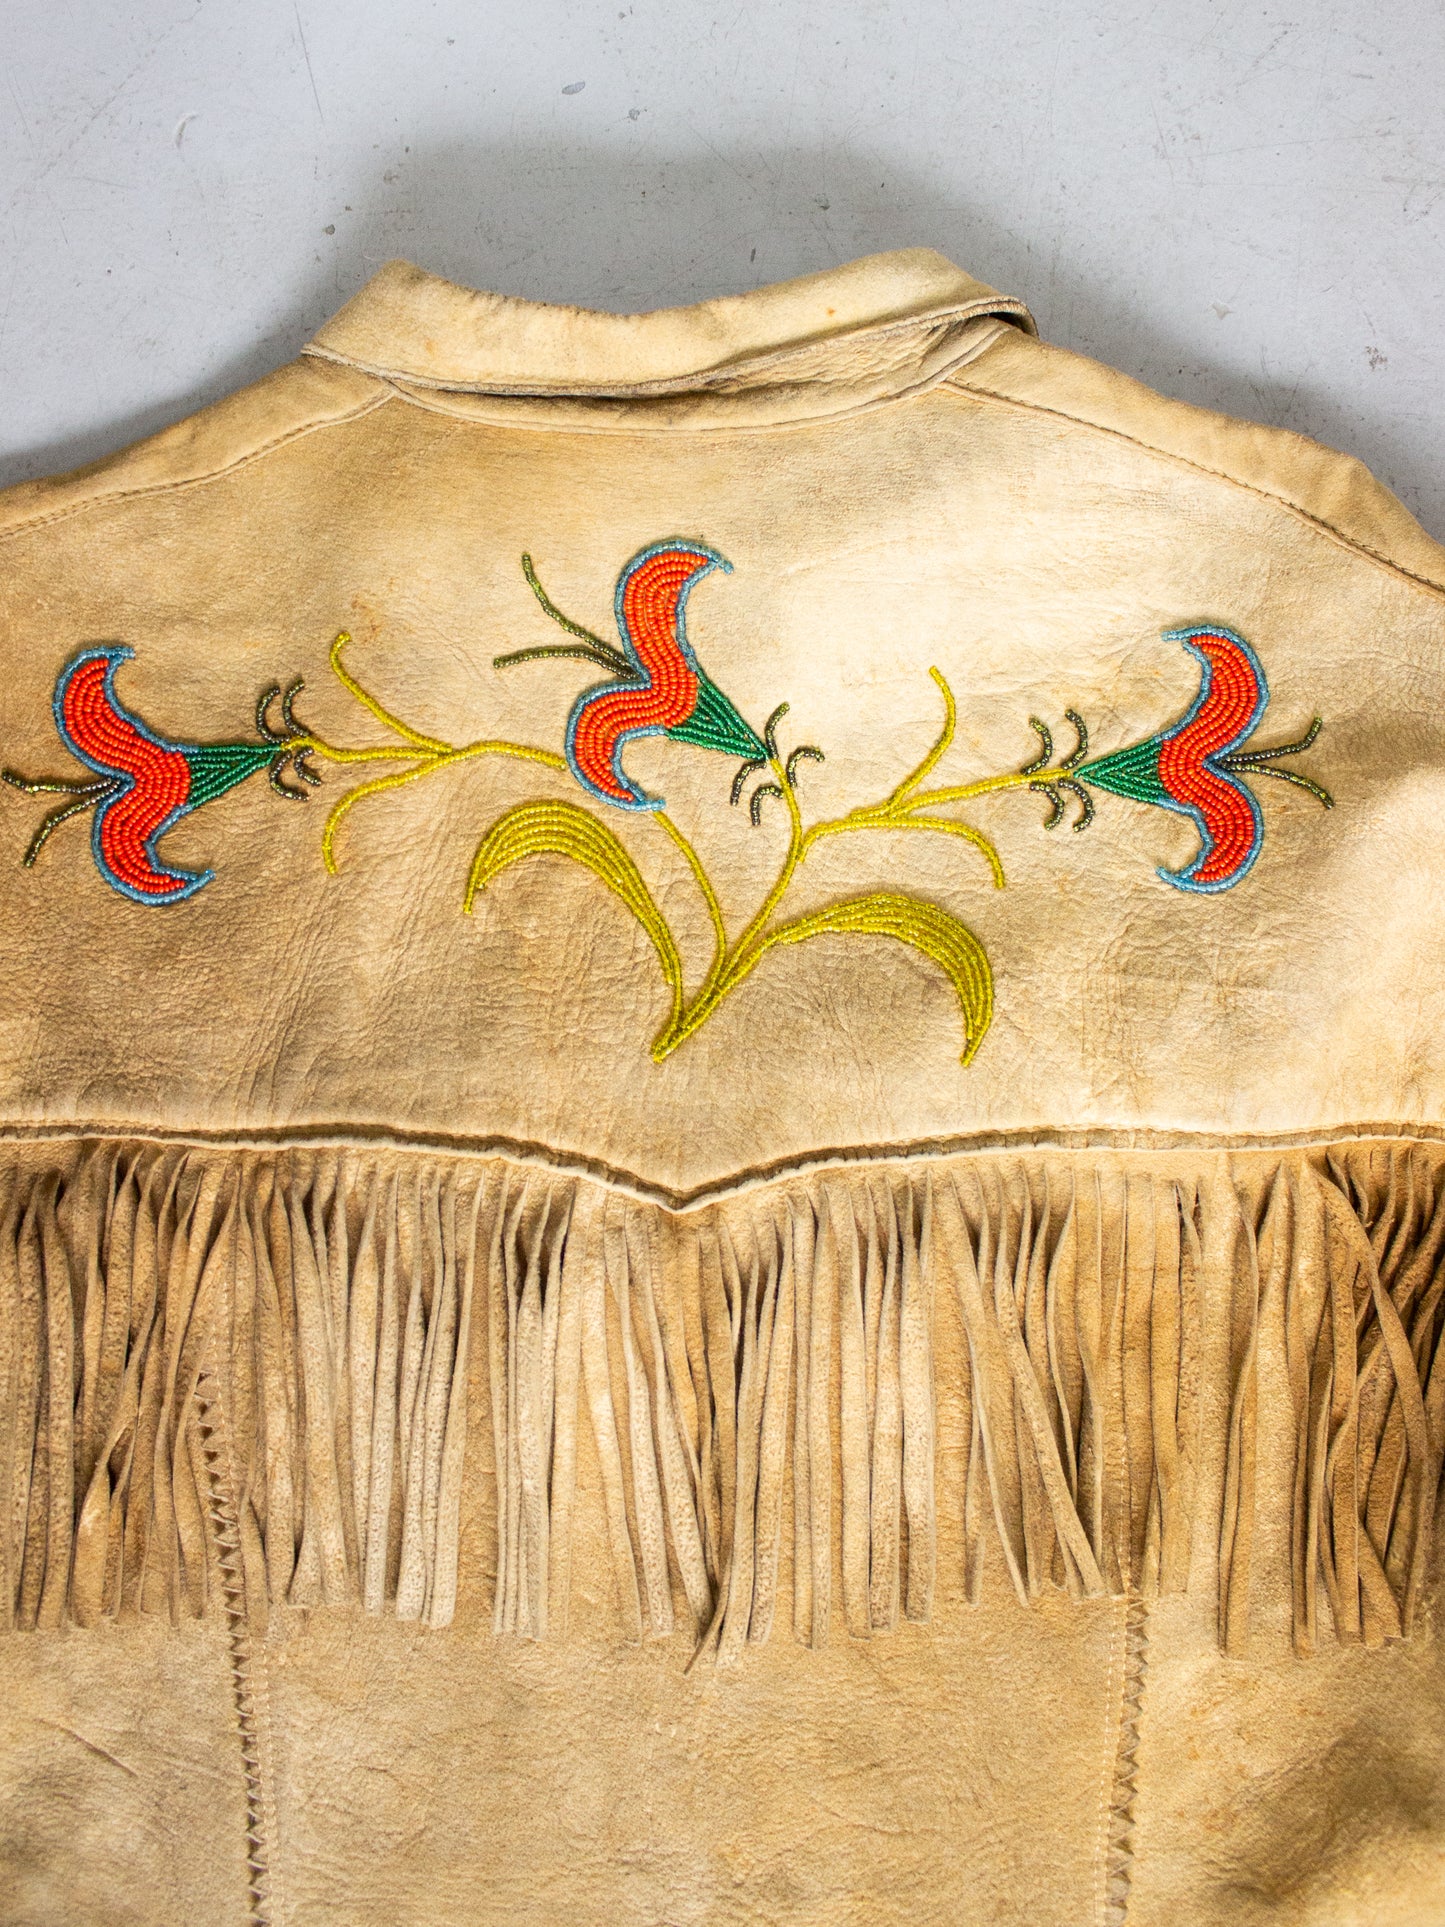 1950's Tan Buckskin Suede Fringed Native Canadian Jacket with Hand Beaded Flowers Acme Zipper (Women's Medium)